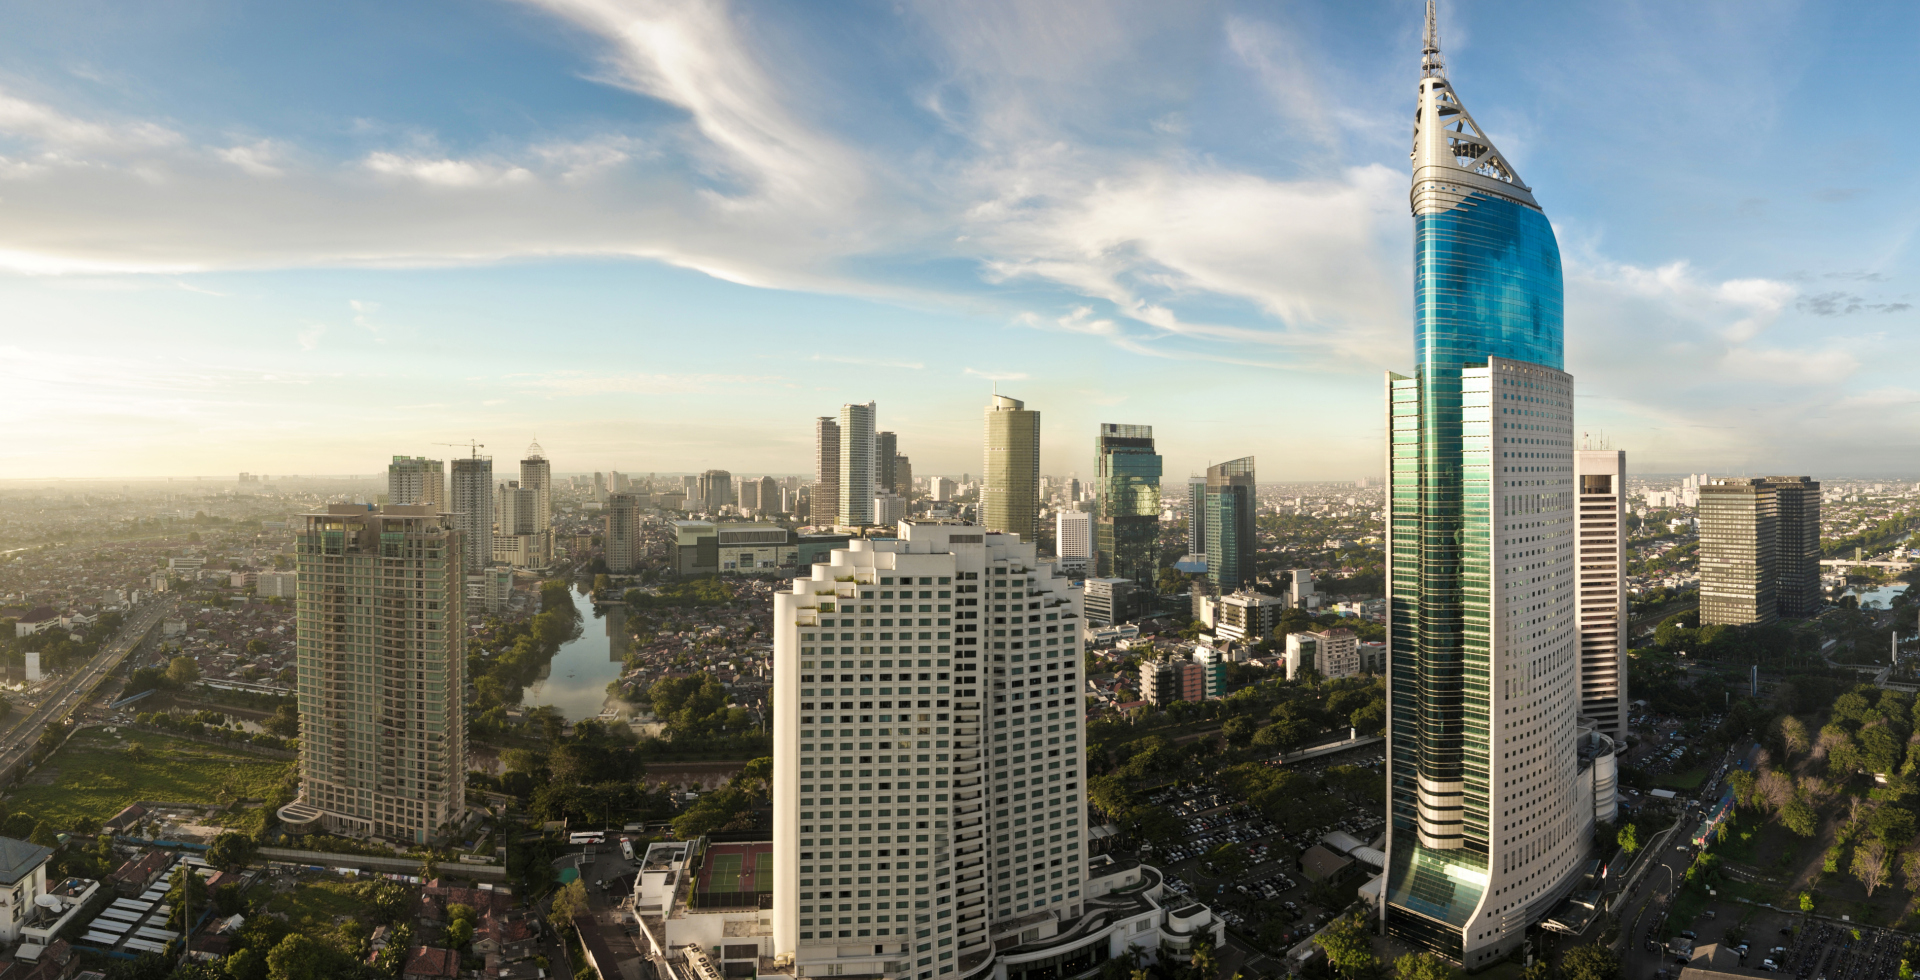 Indonesia's iconic buildings